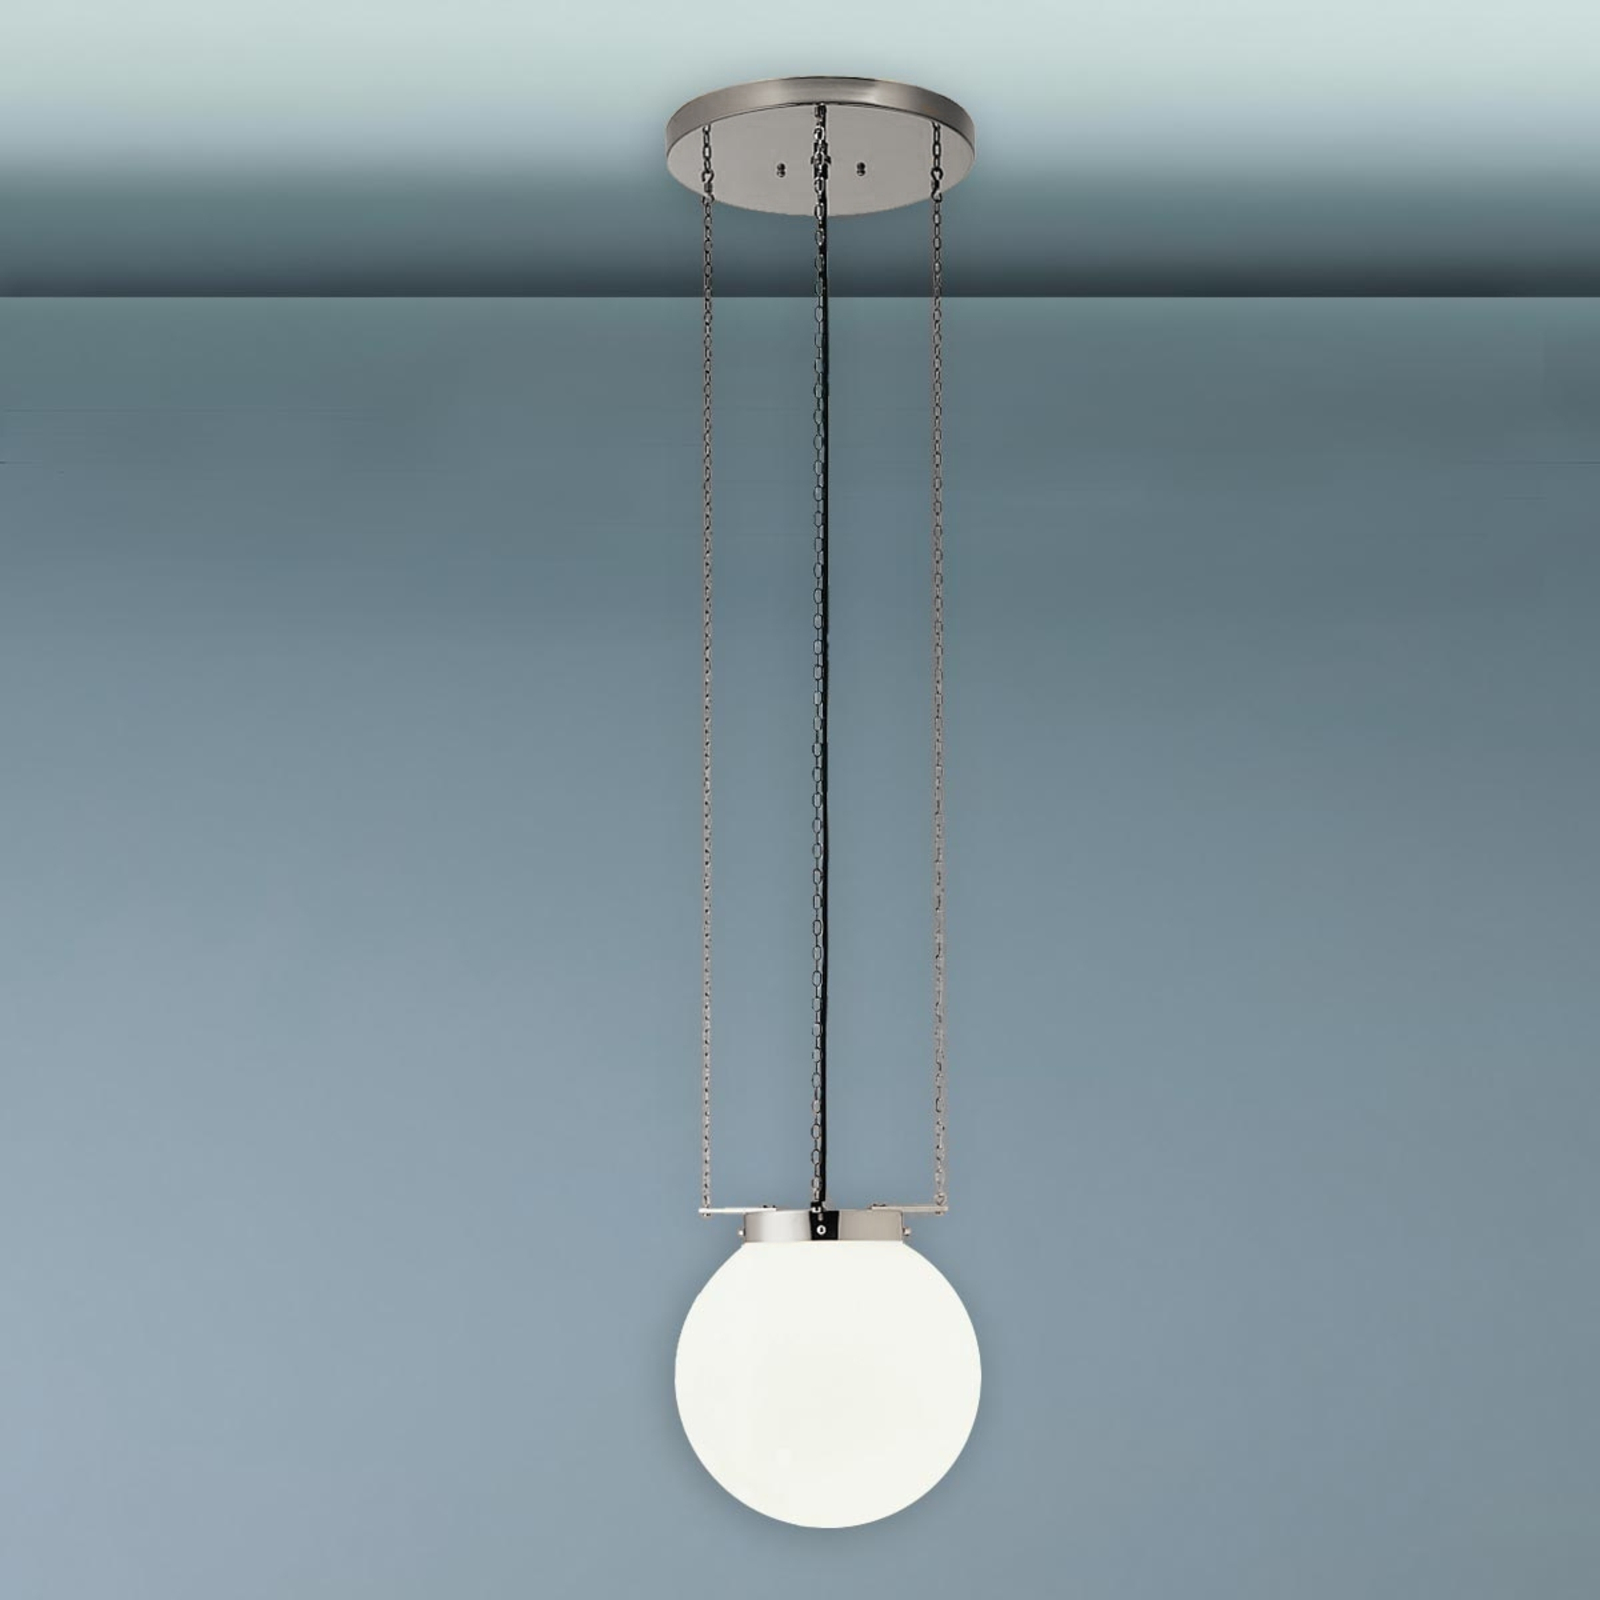 Hanging light in the Bauhaus style, nickel, 35 cm